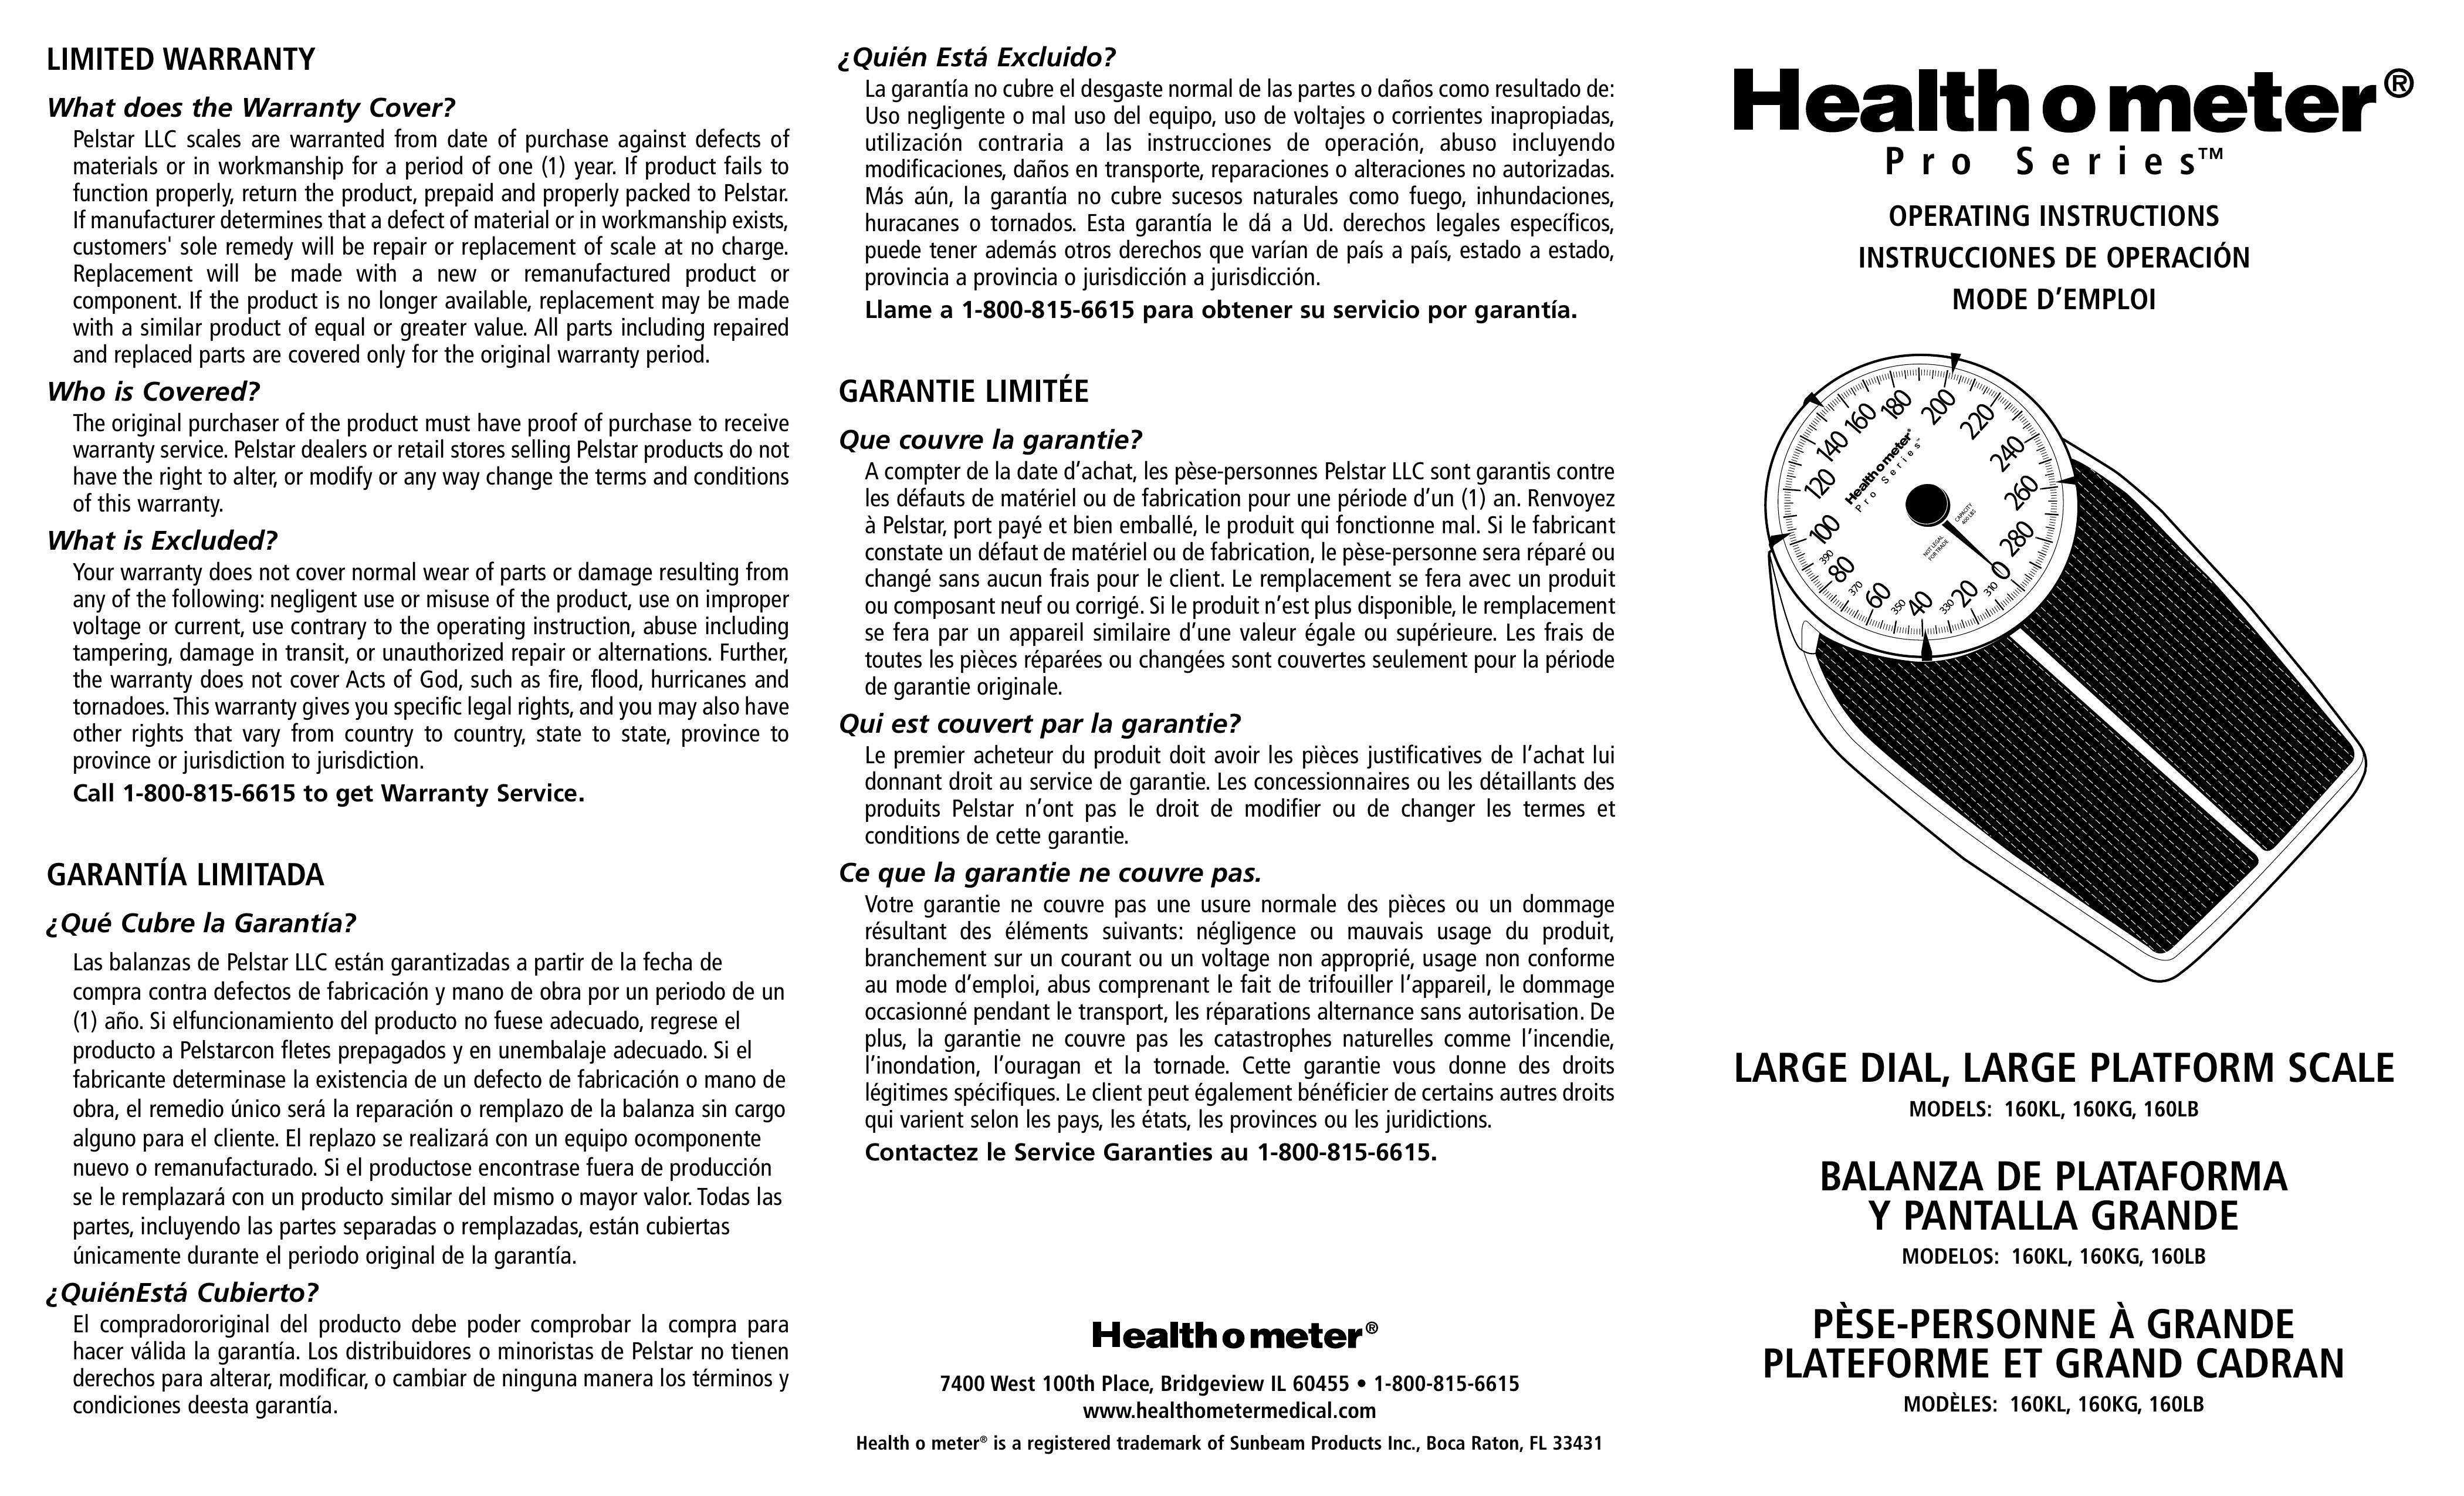 Health O Meter 160LB Scale User Manual